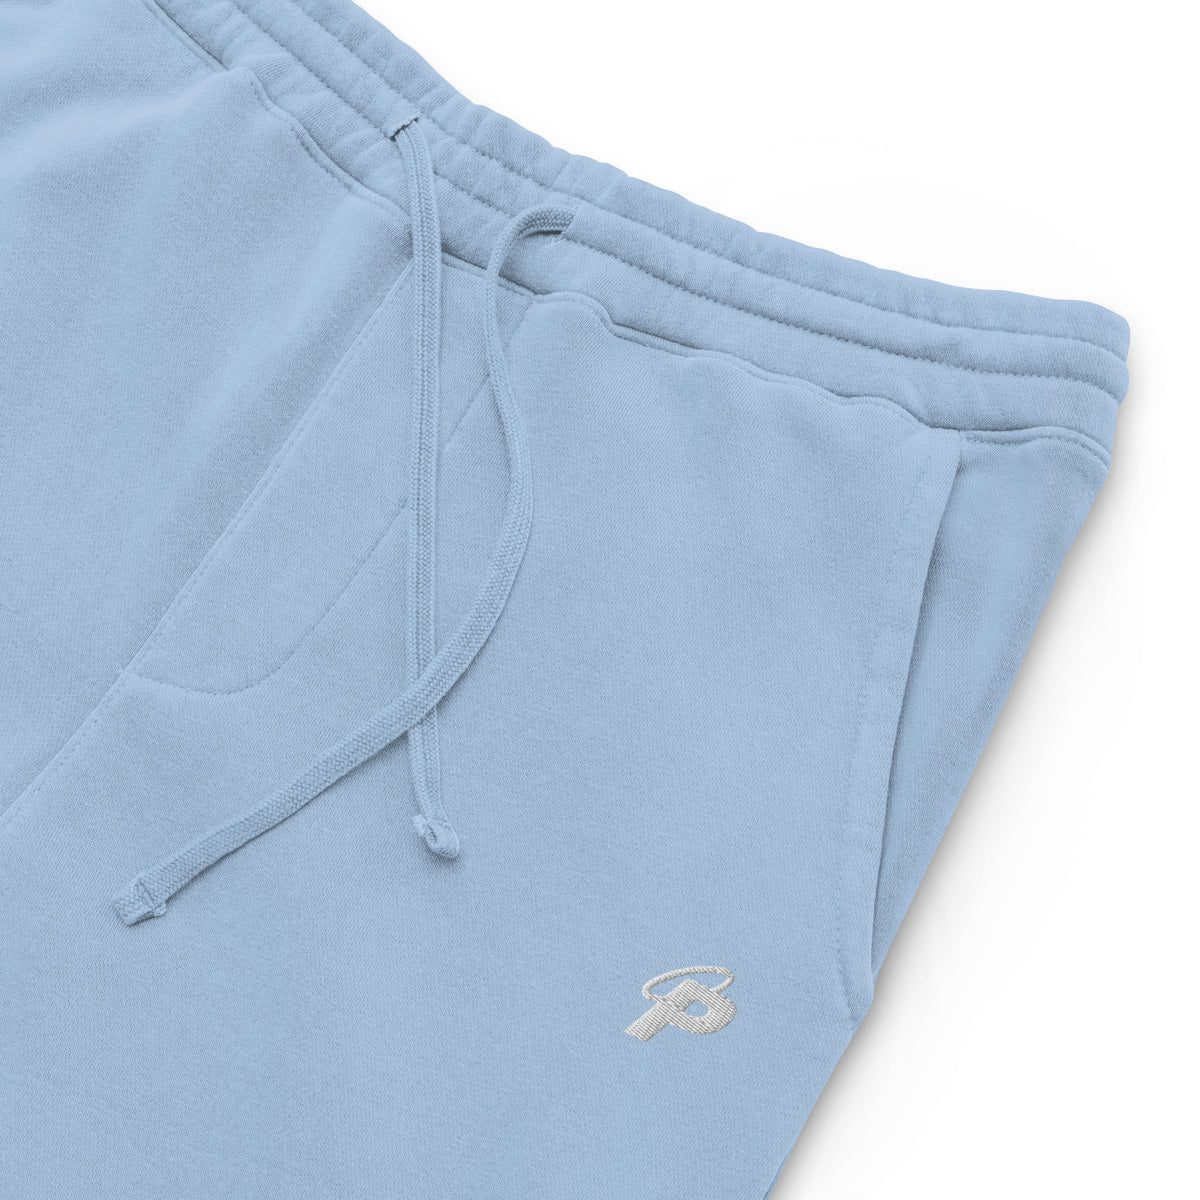 Phenomenally Soft Garment Dye Jogger Sweatpants (Light Blue) – PHENOMENAL